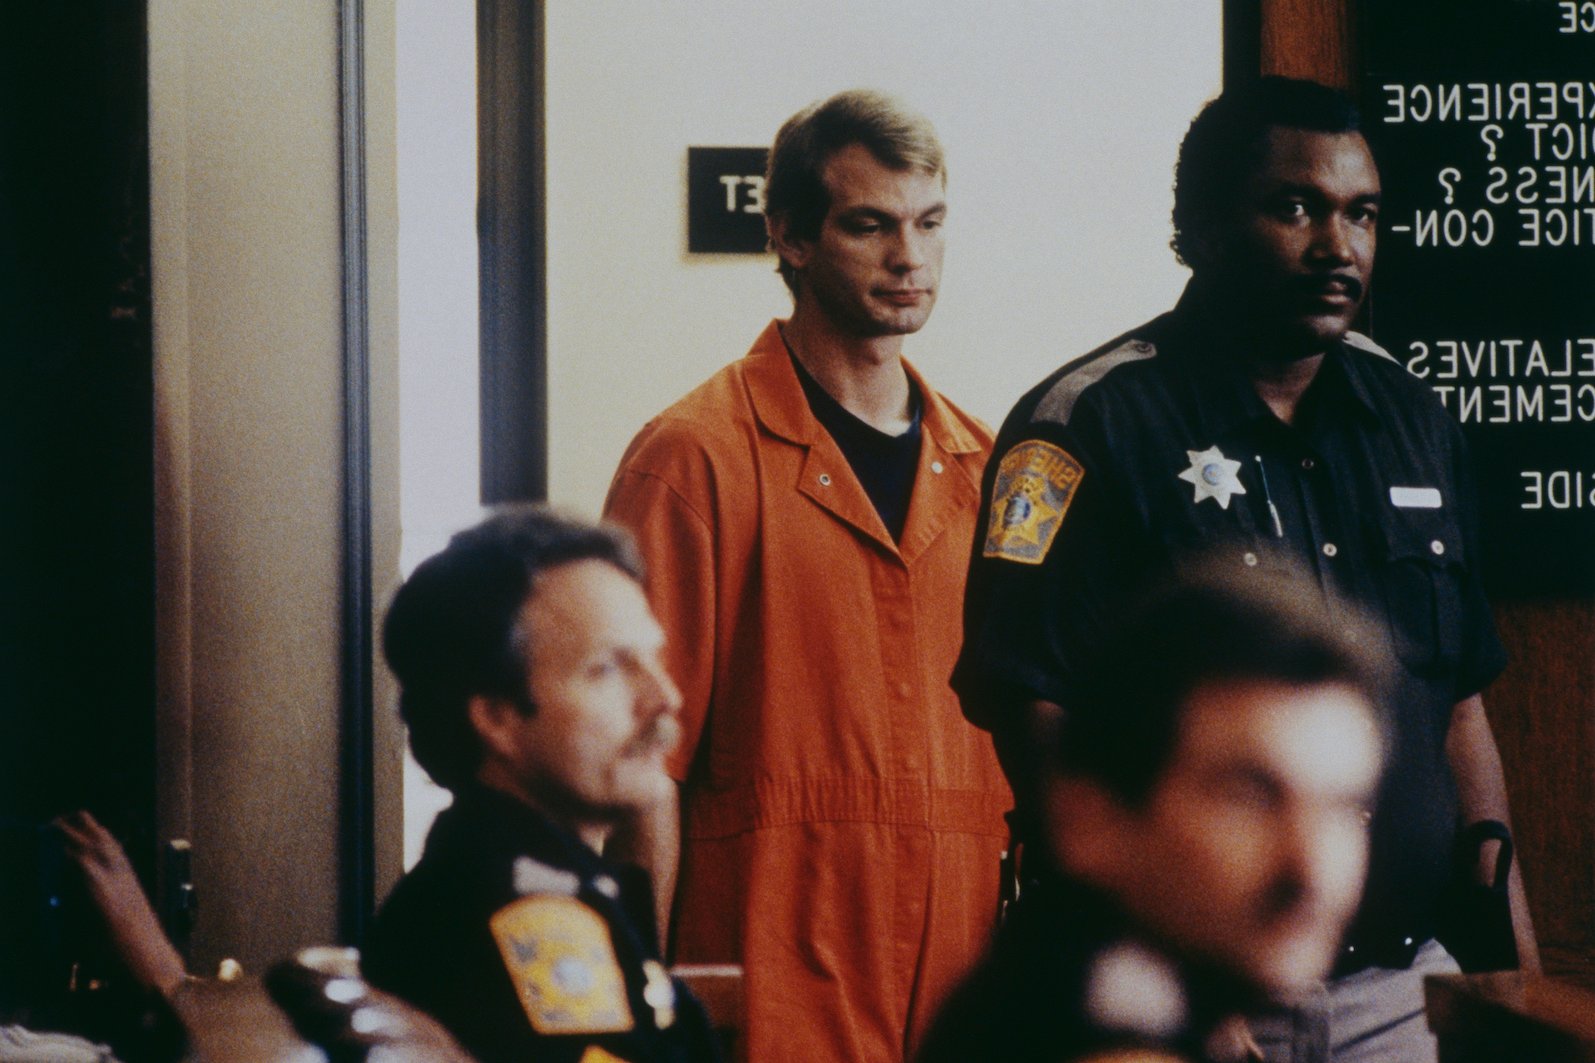 Jeffrey Dahmer in an orange jumpsuit at his trial